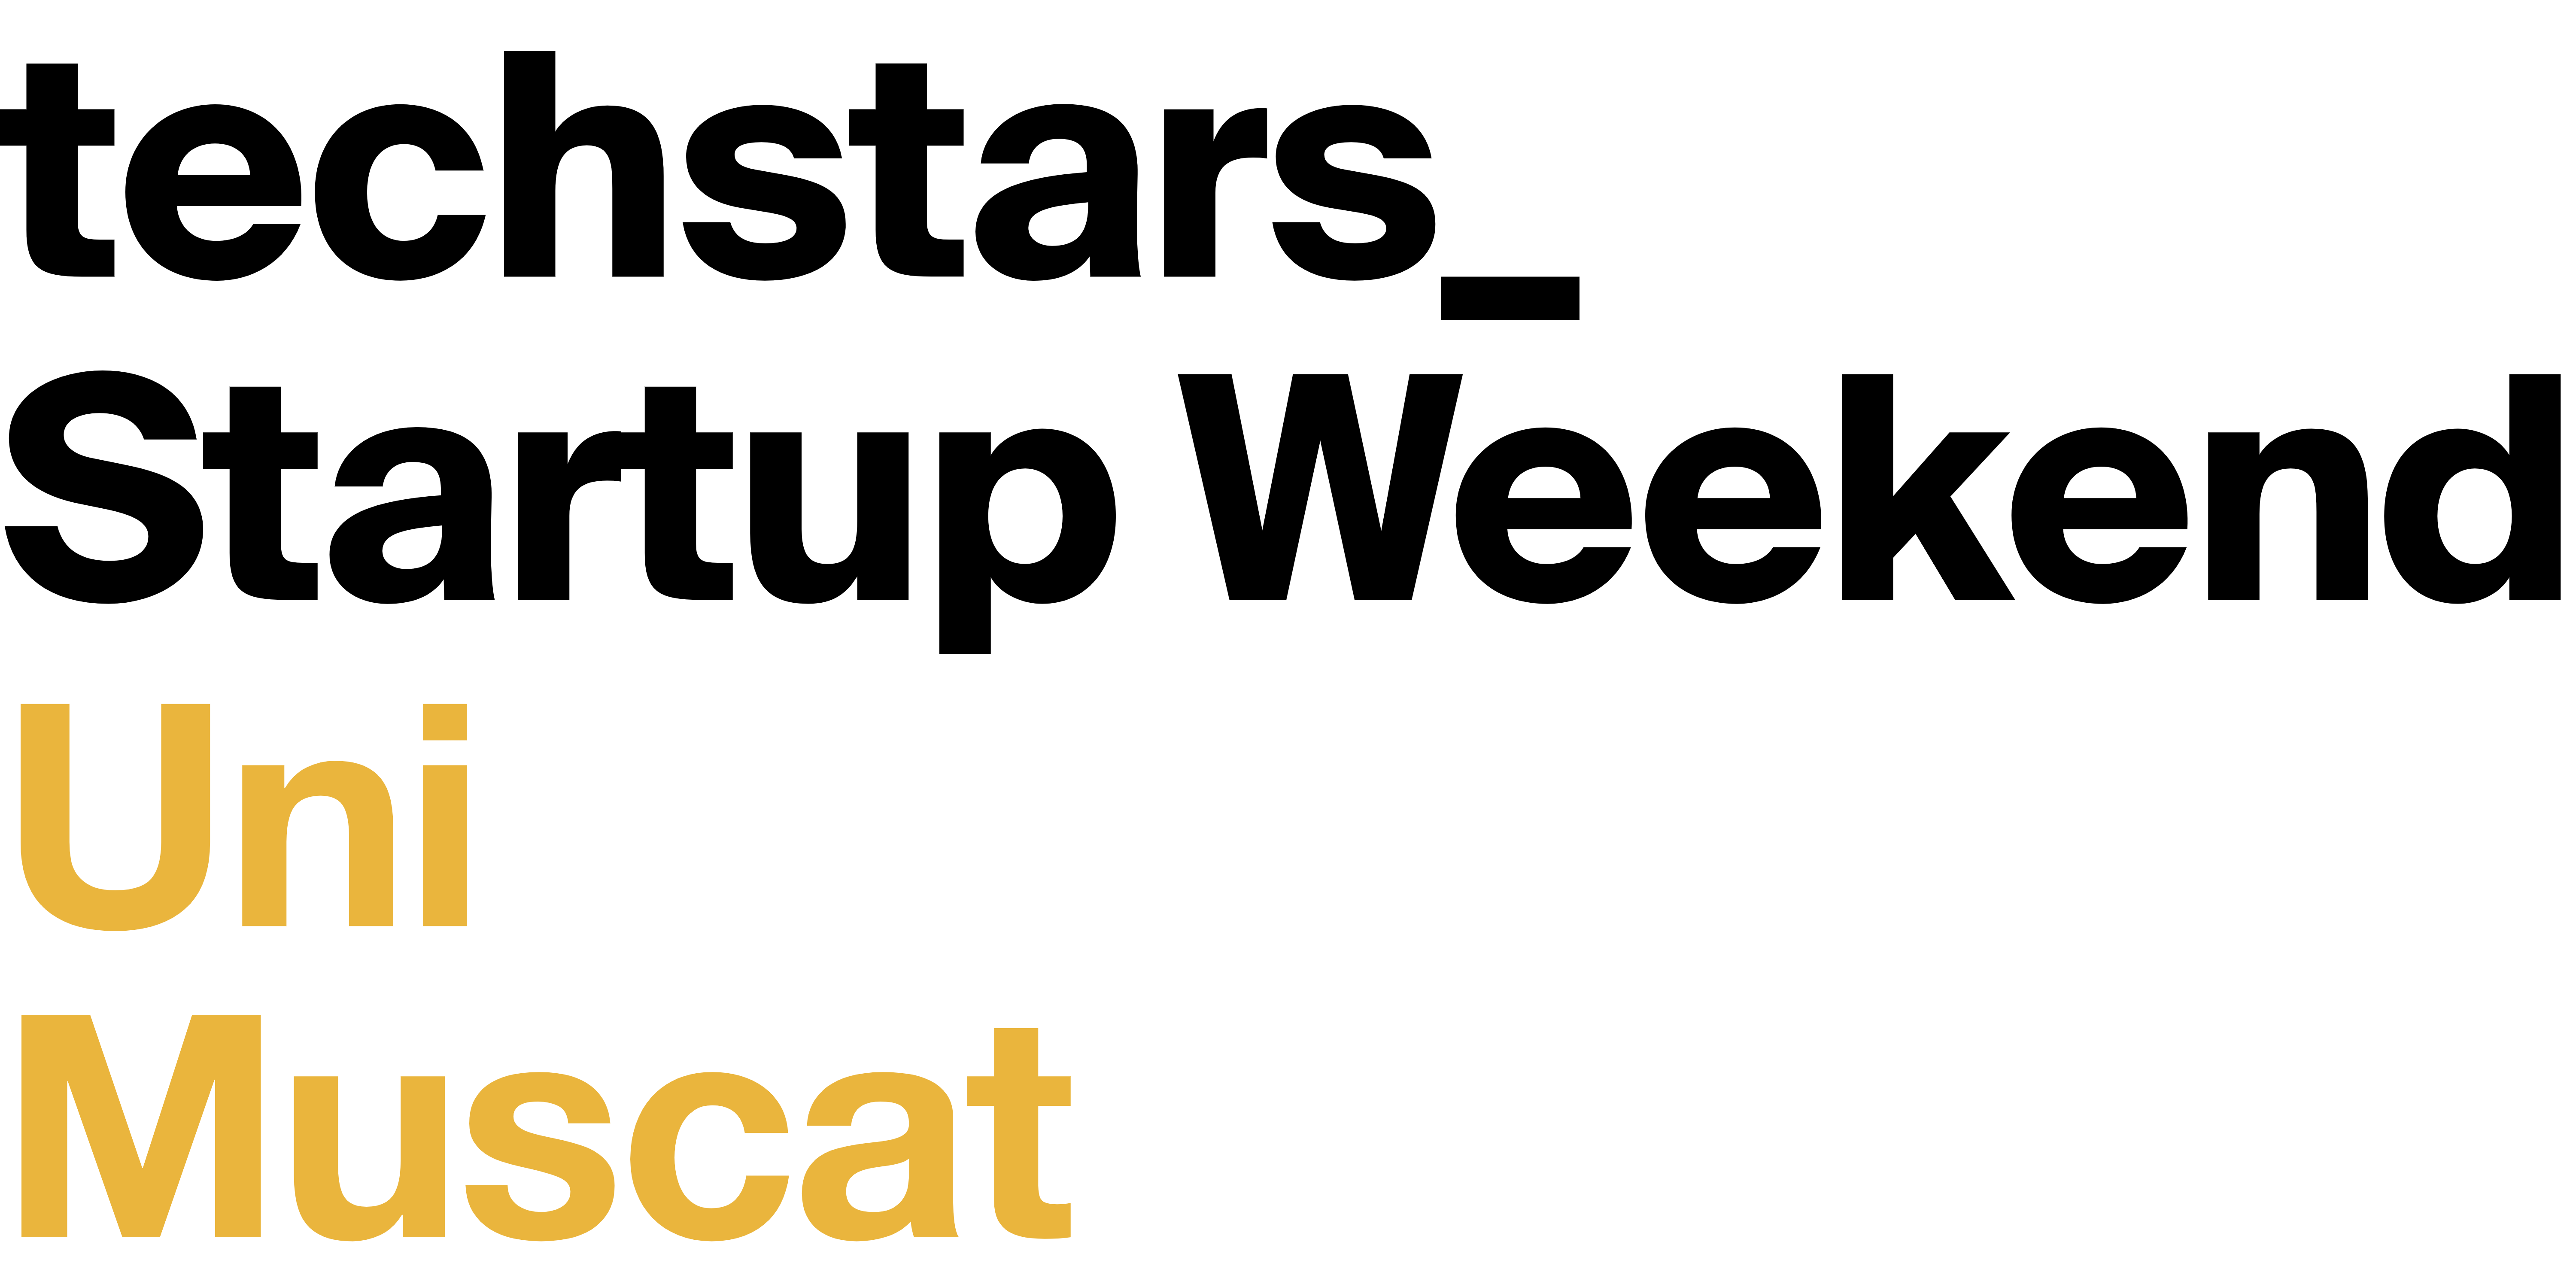 Techstars Startup Weekend Uni Muscat